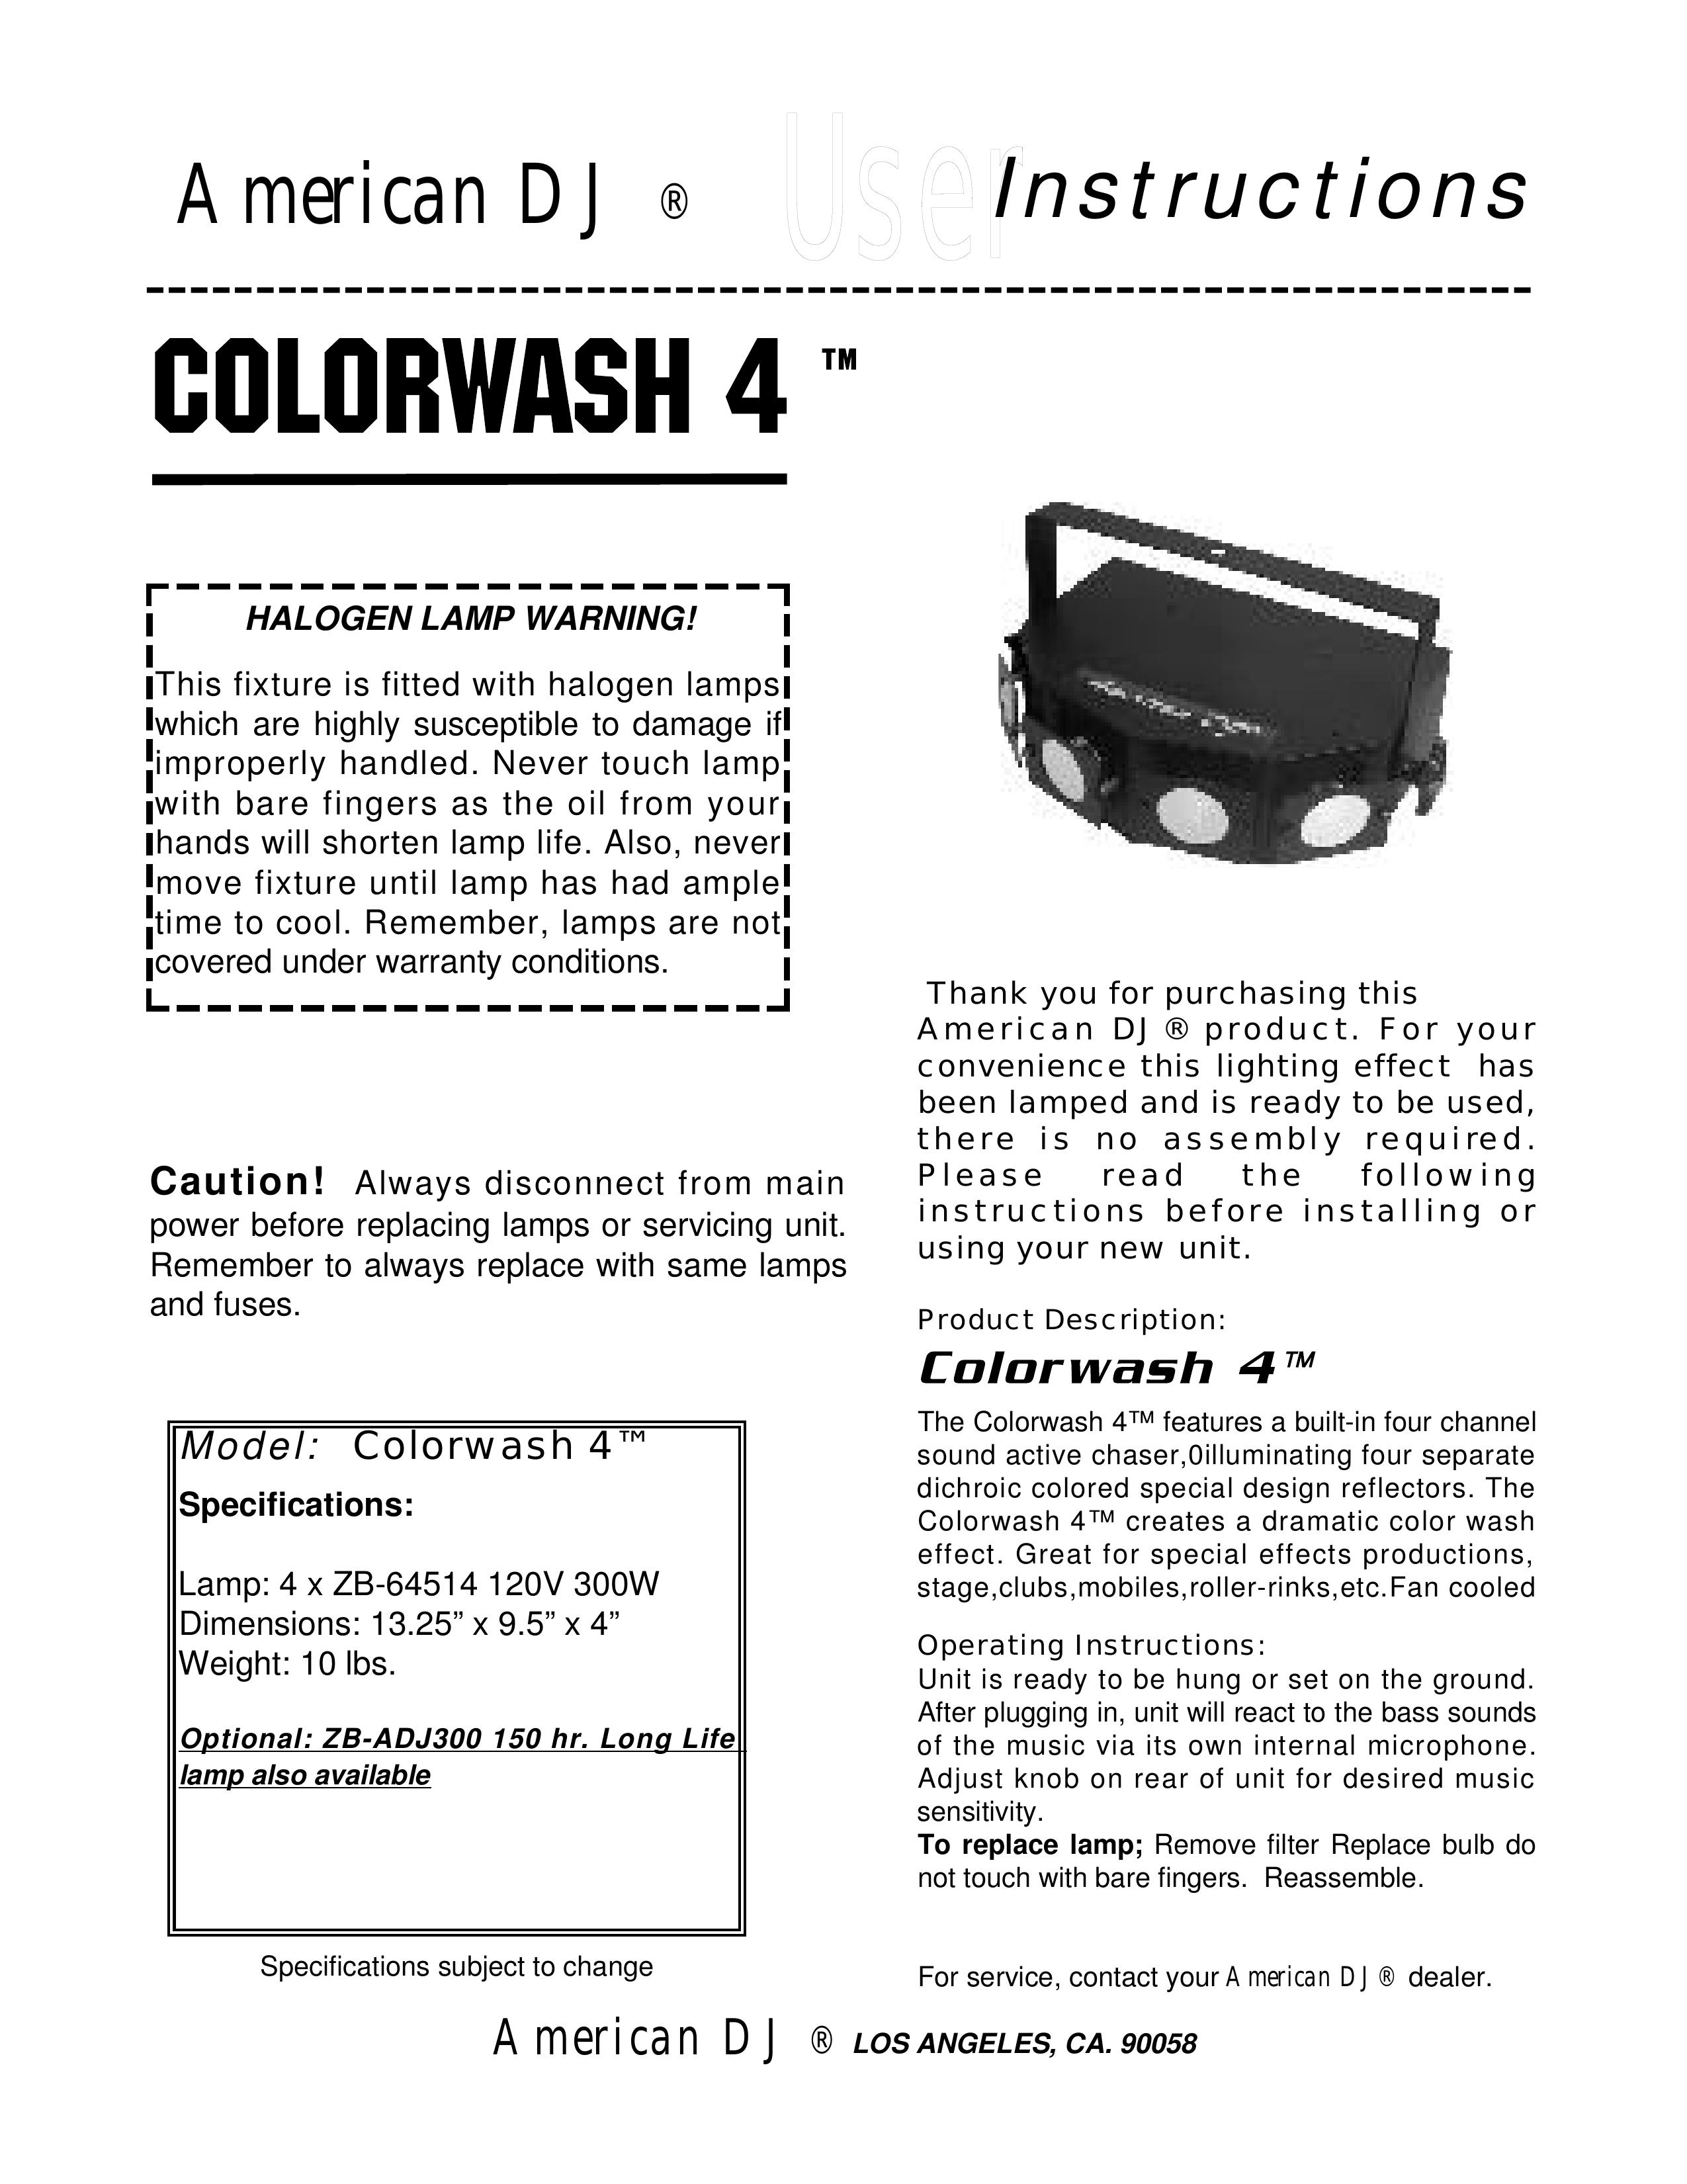 American DJ Colorwash 4 DJ Equipment User Manual (Page 1)